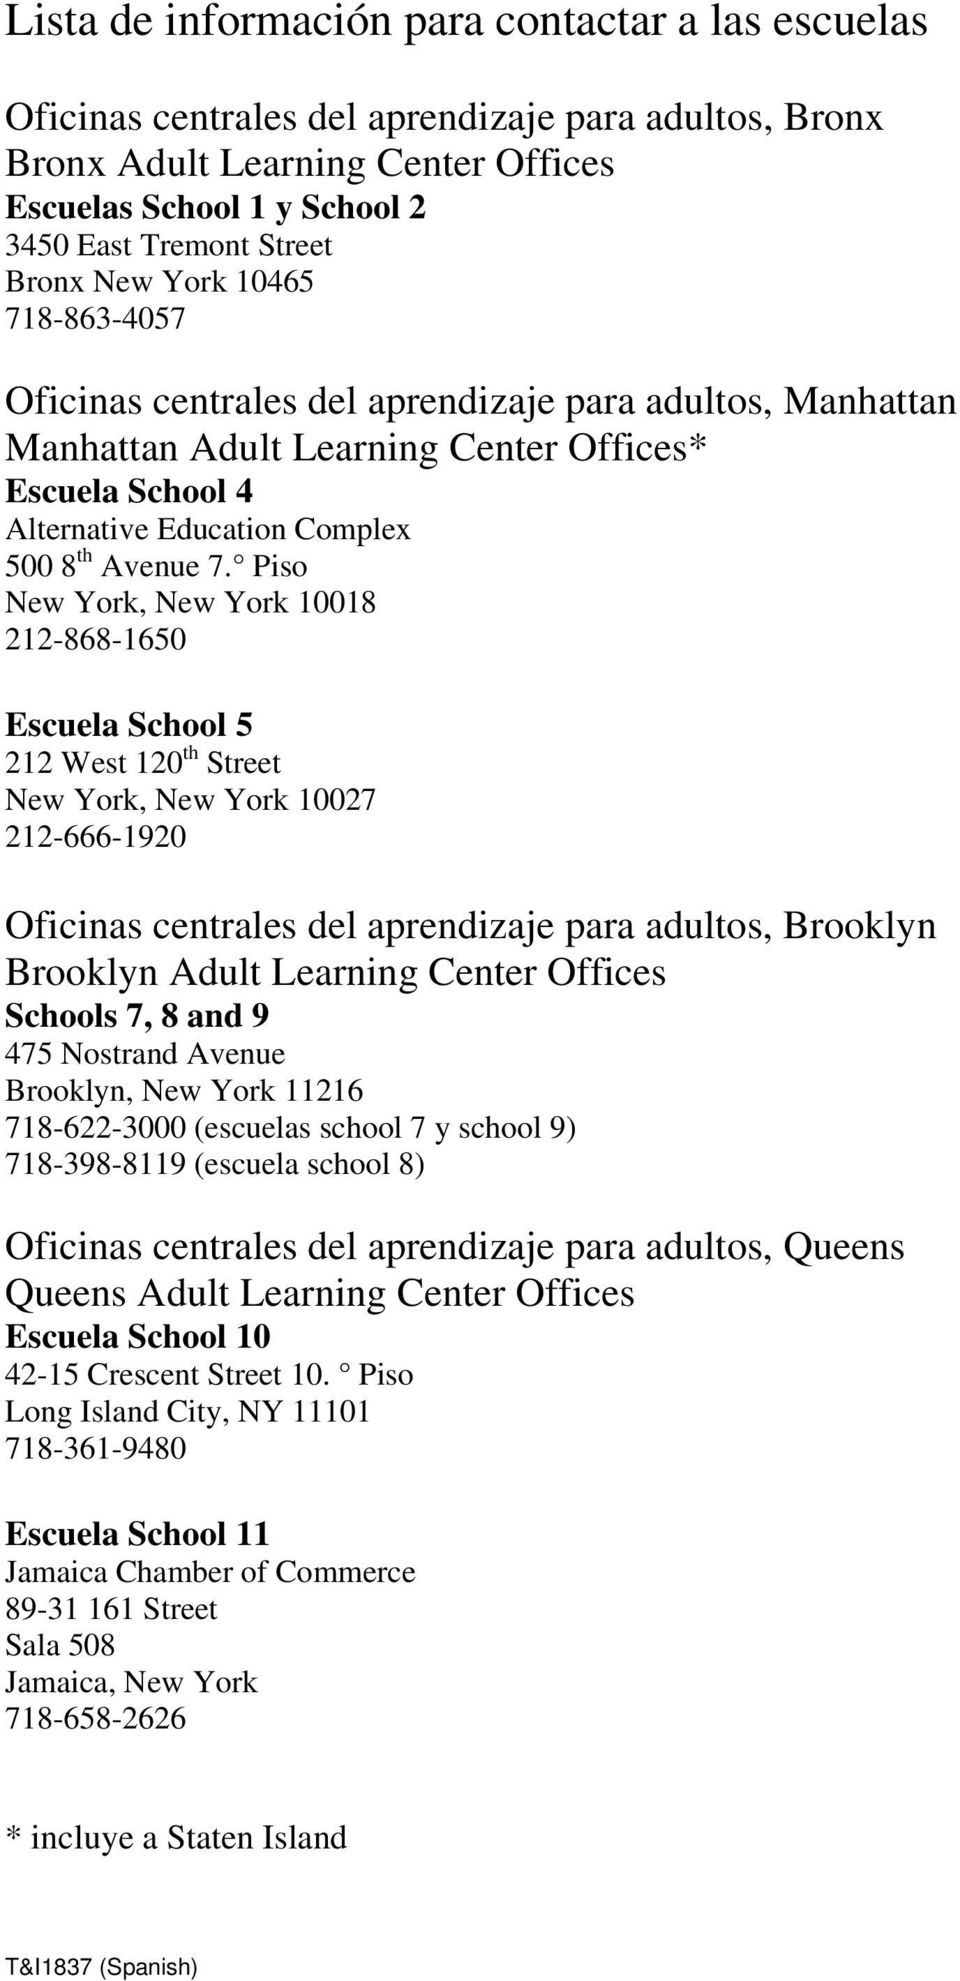 Piso New York, New York 10018 212-868-1650 Escuela School 5 212 West 120 th Street New York, New York 10027 212-666-1920 Oficinas centrales del aprendizaje para adultos, Brooklyn Brooklyn Adult